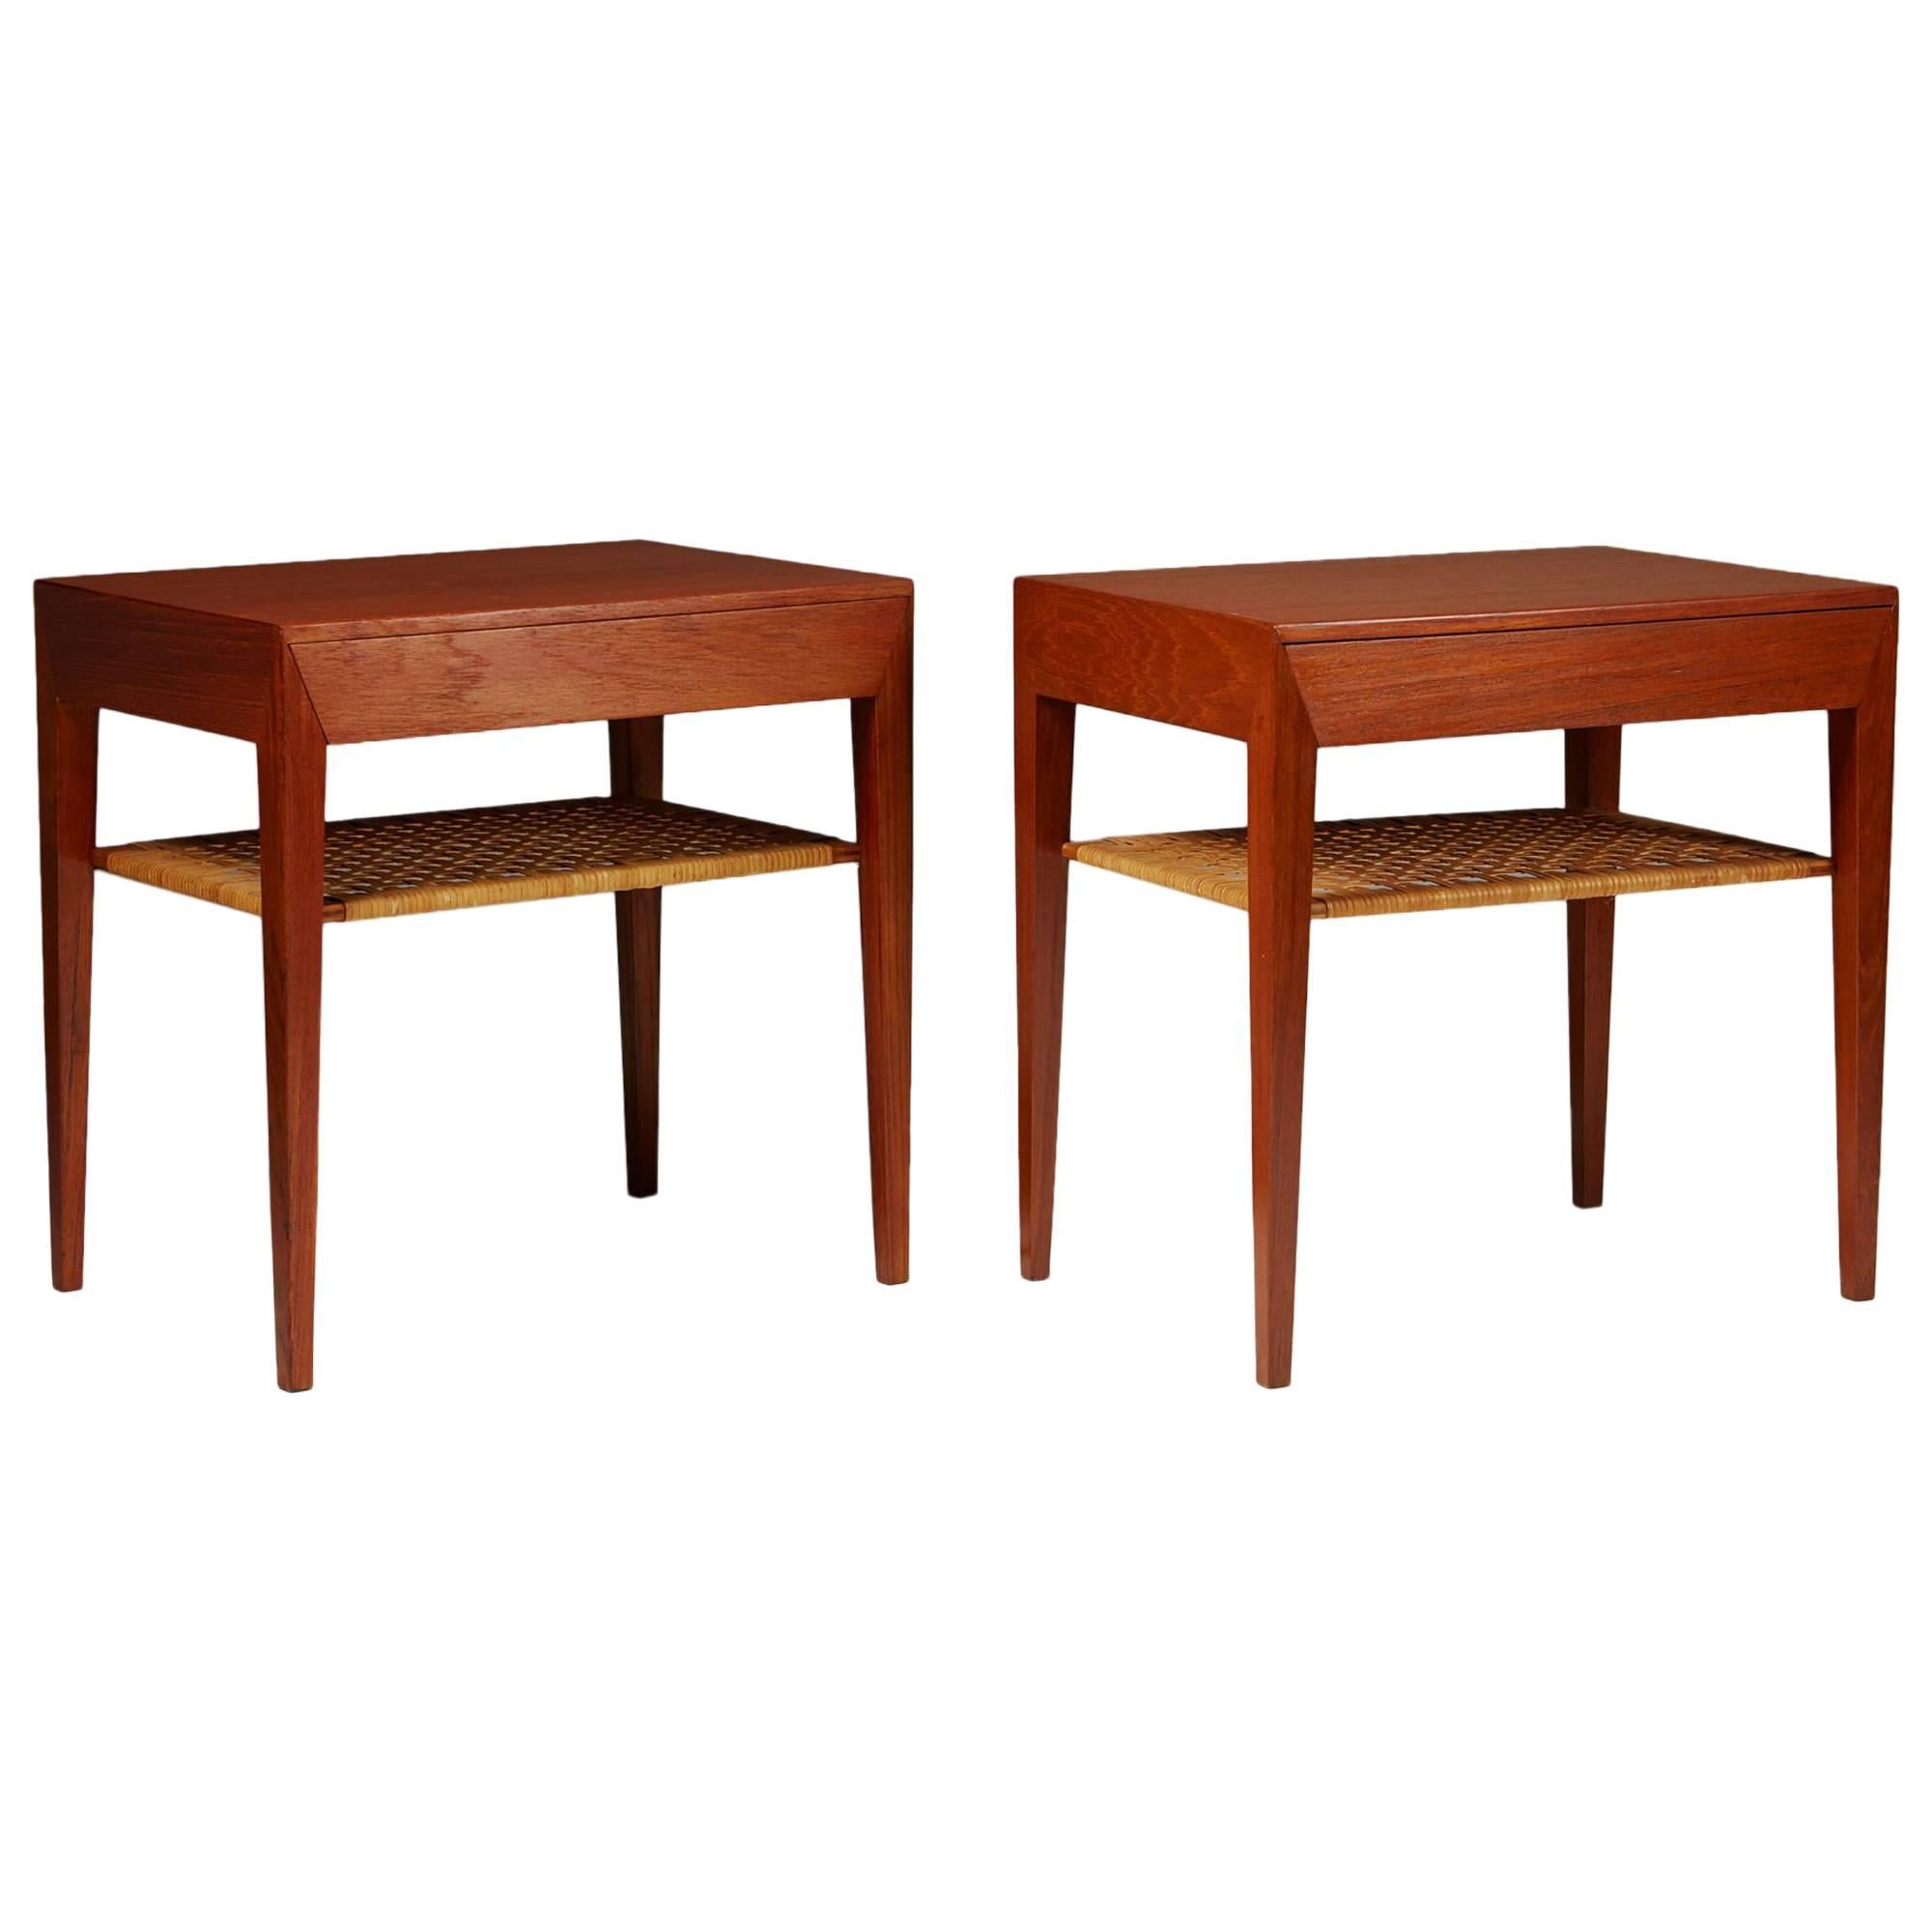 Pair of Bedside Tables Designed by Severin Hansen for Haslev, Denmark, 1950s